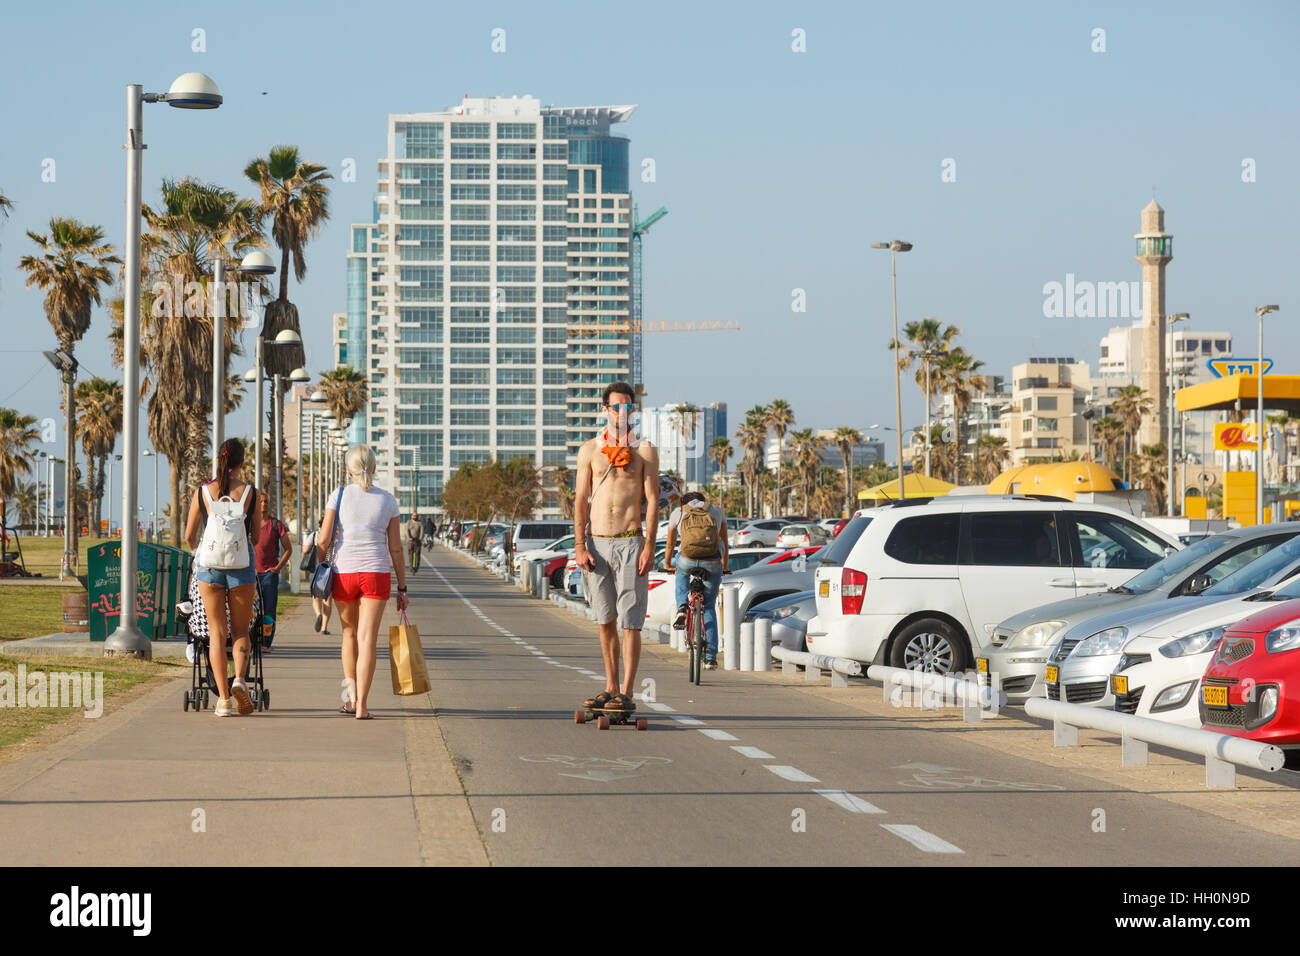 TEL AVIV,ISRAEL - April 4, 2016 : Man ao a skateboard, man on a bike and two women with a pram at the seaside promenade in Tel Aviv, Israel on on Apri Stock Photo